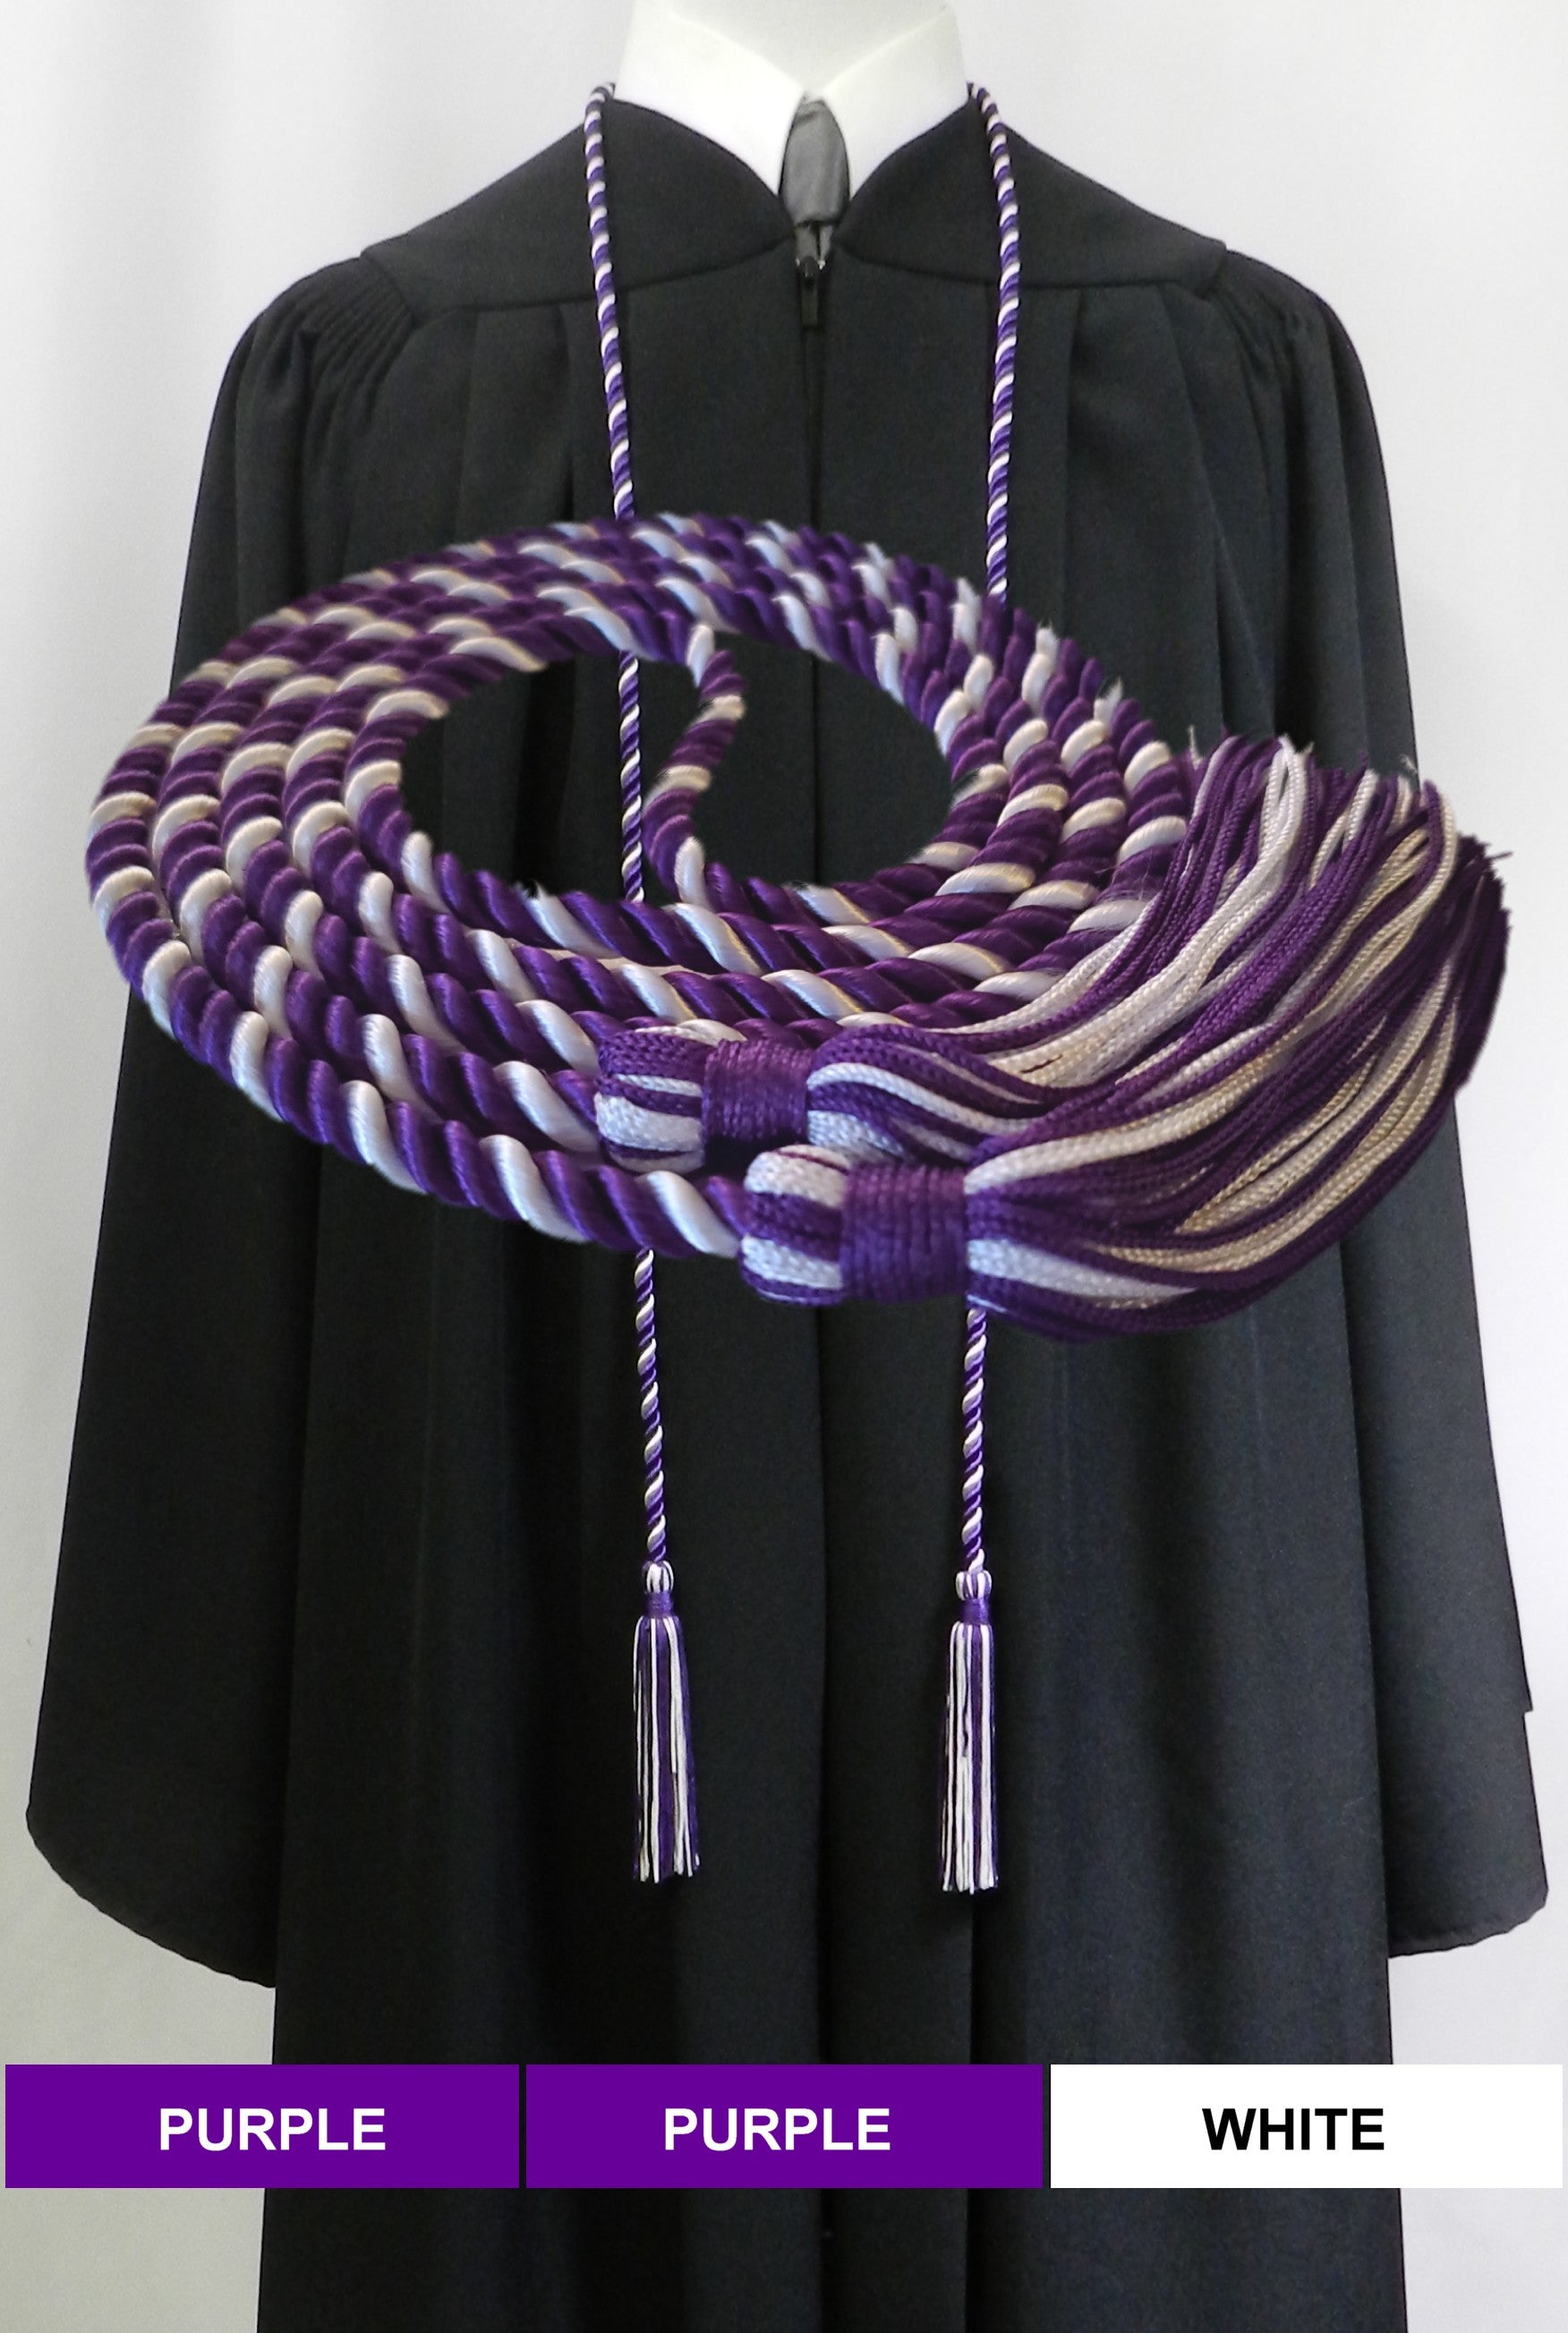 Purple White Honor Cords  Senior Class Graduation Products